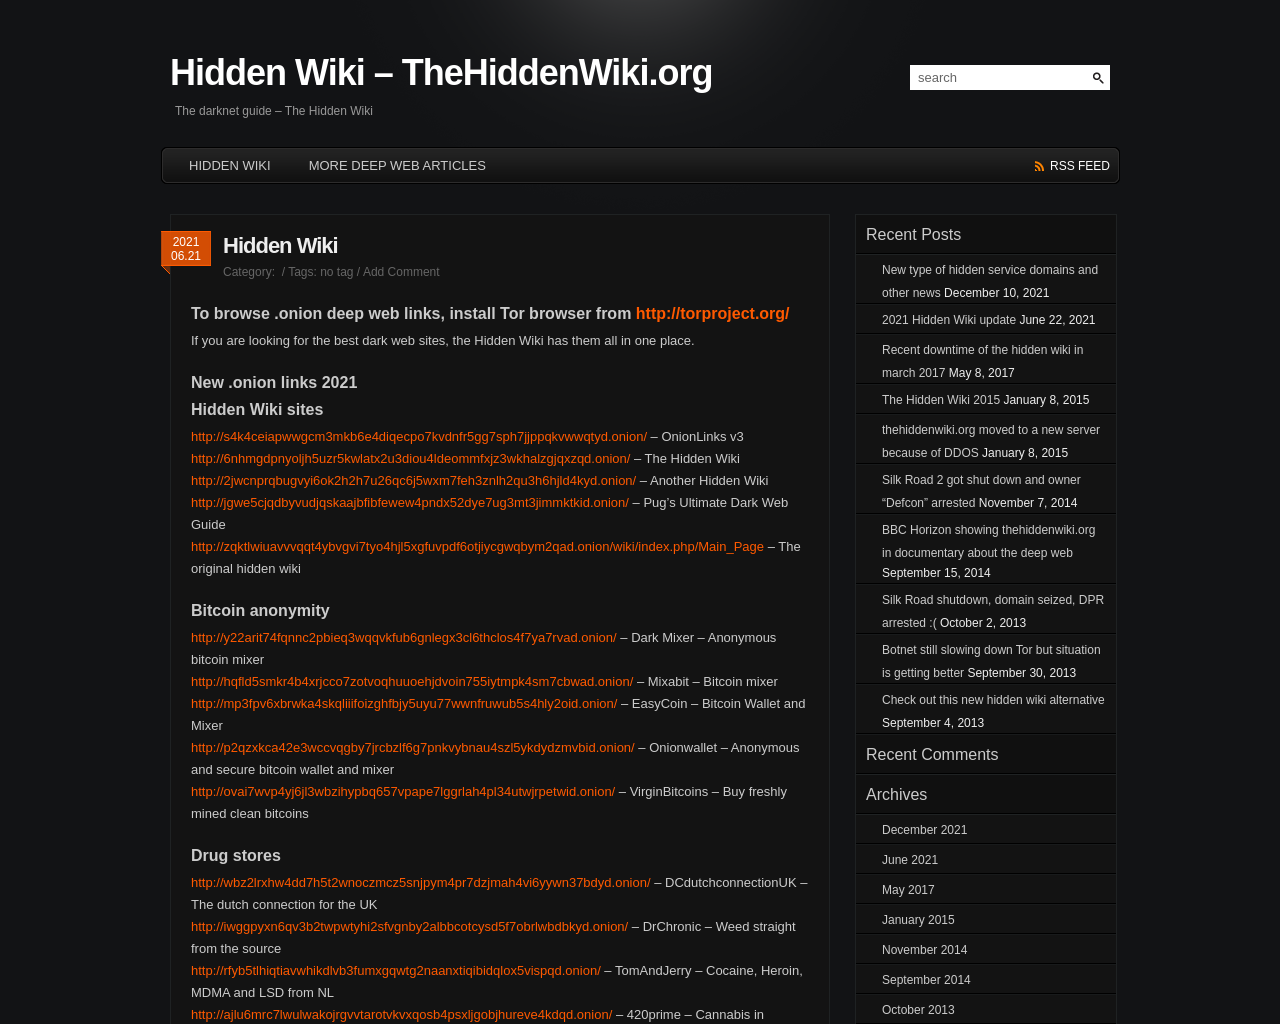 thehiddenwiki.org